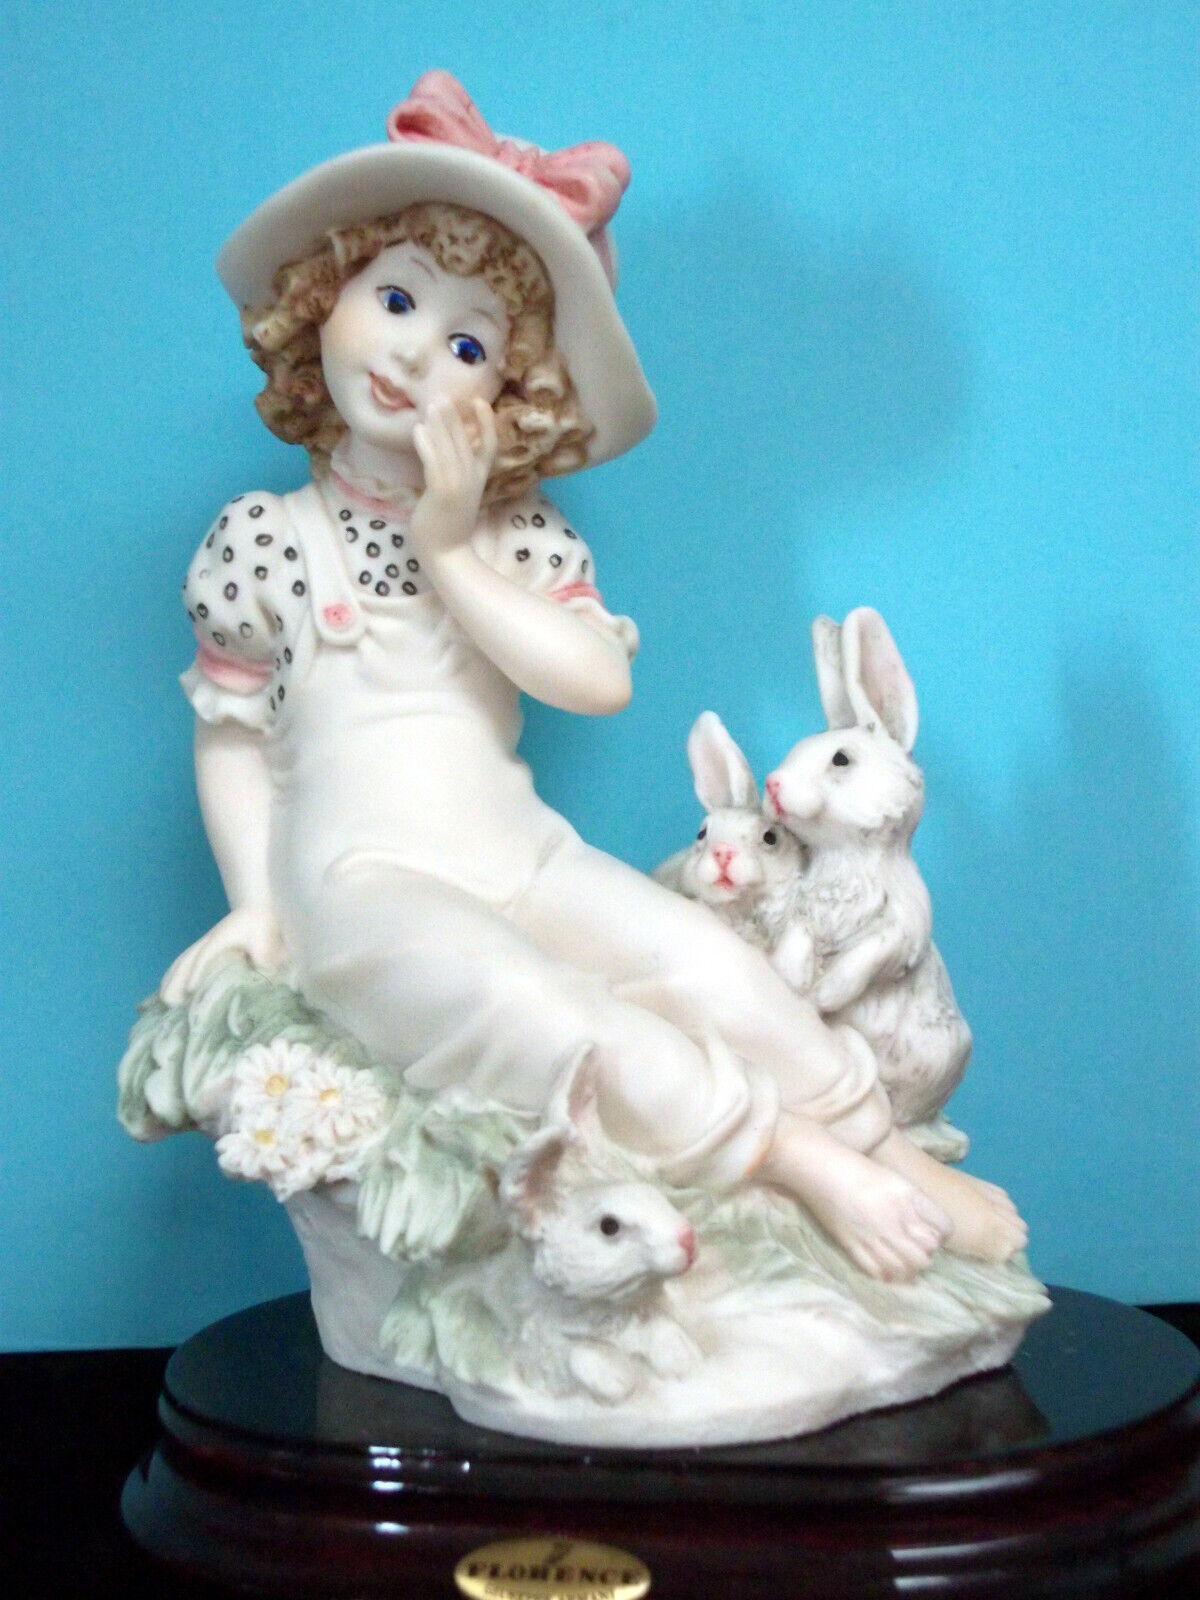 1996 Giuseppe Armani 'Bonny' 0247 Girl with Bunnies Sculpture - Rare